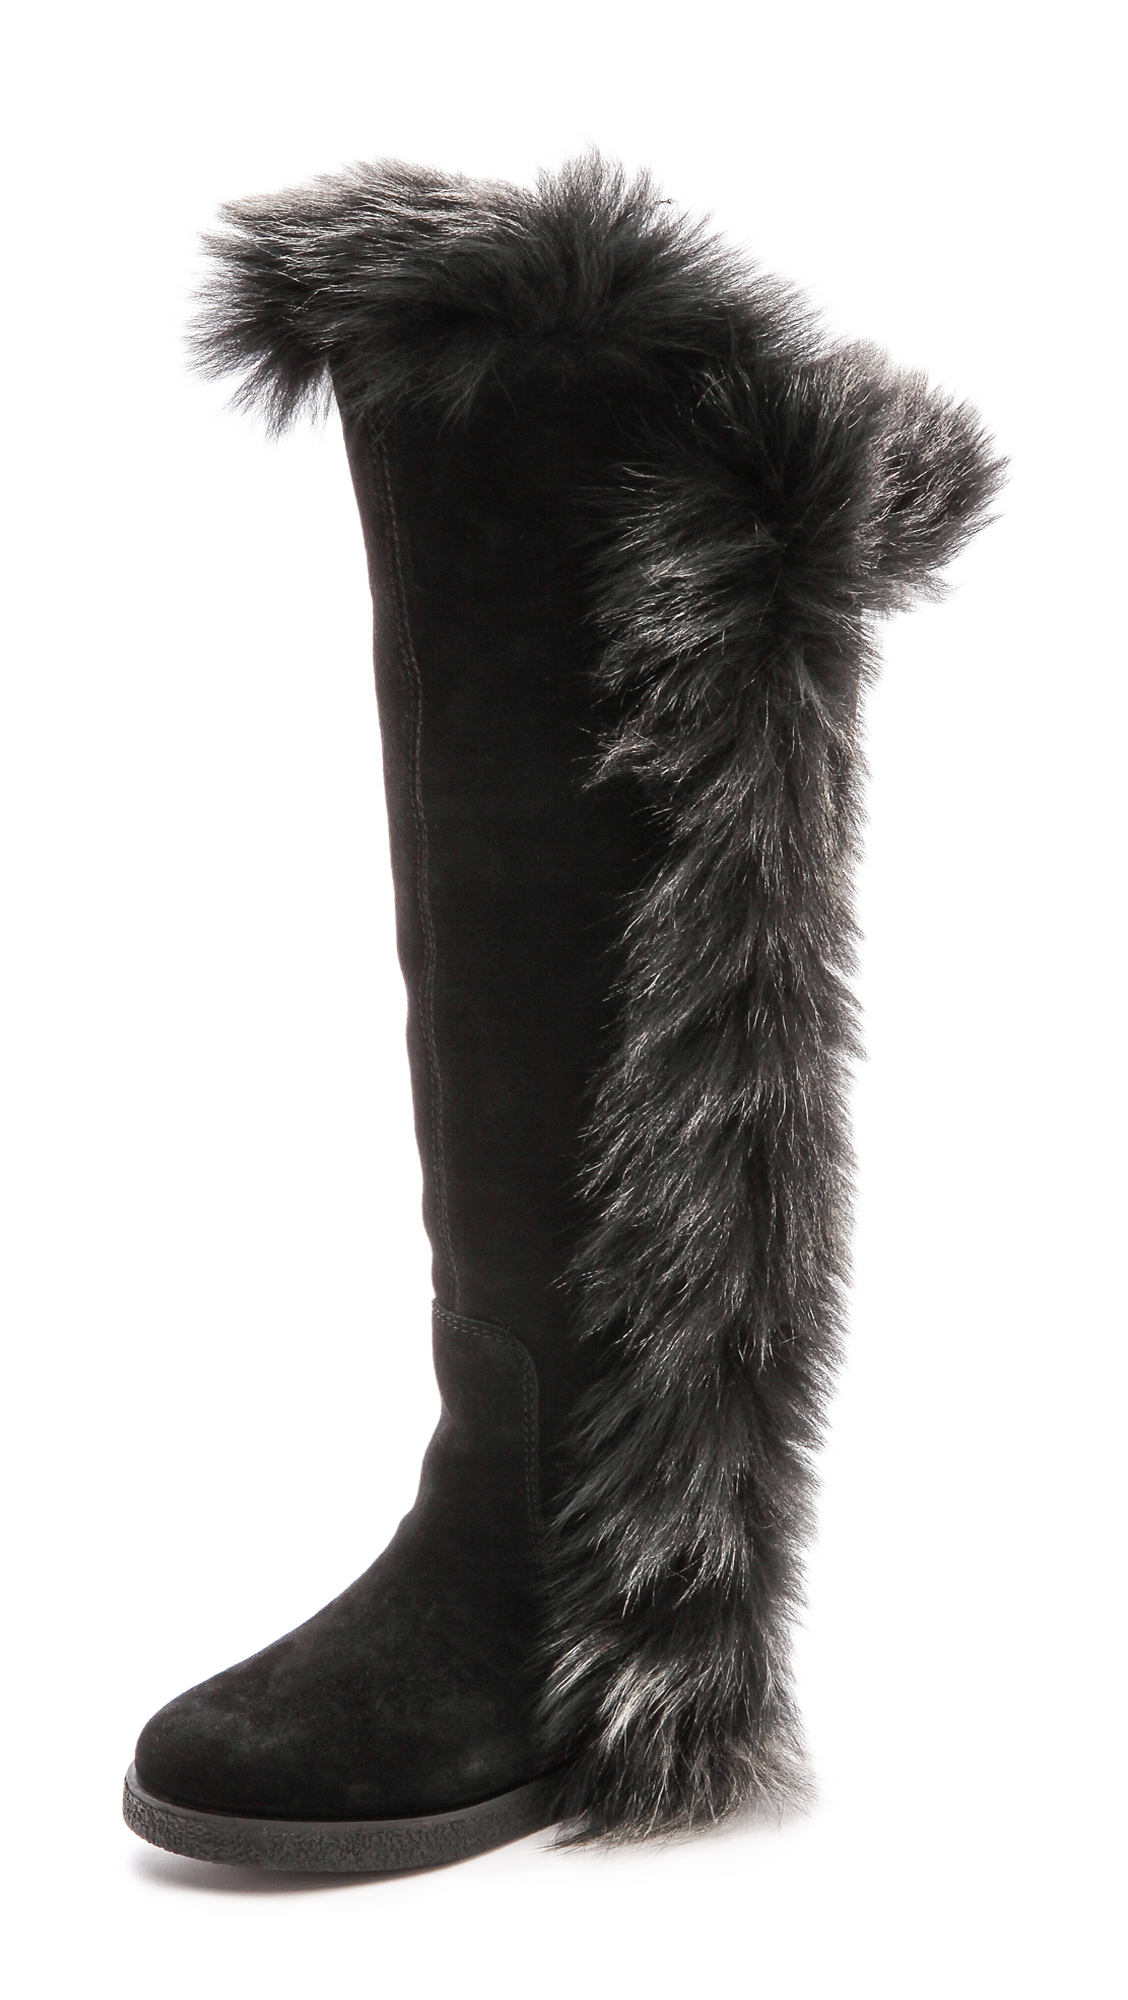 Koolaburra Sasha Ii Boots With Fur Trim - Black - Lyst